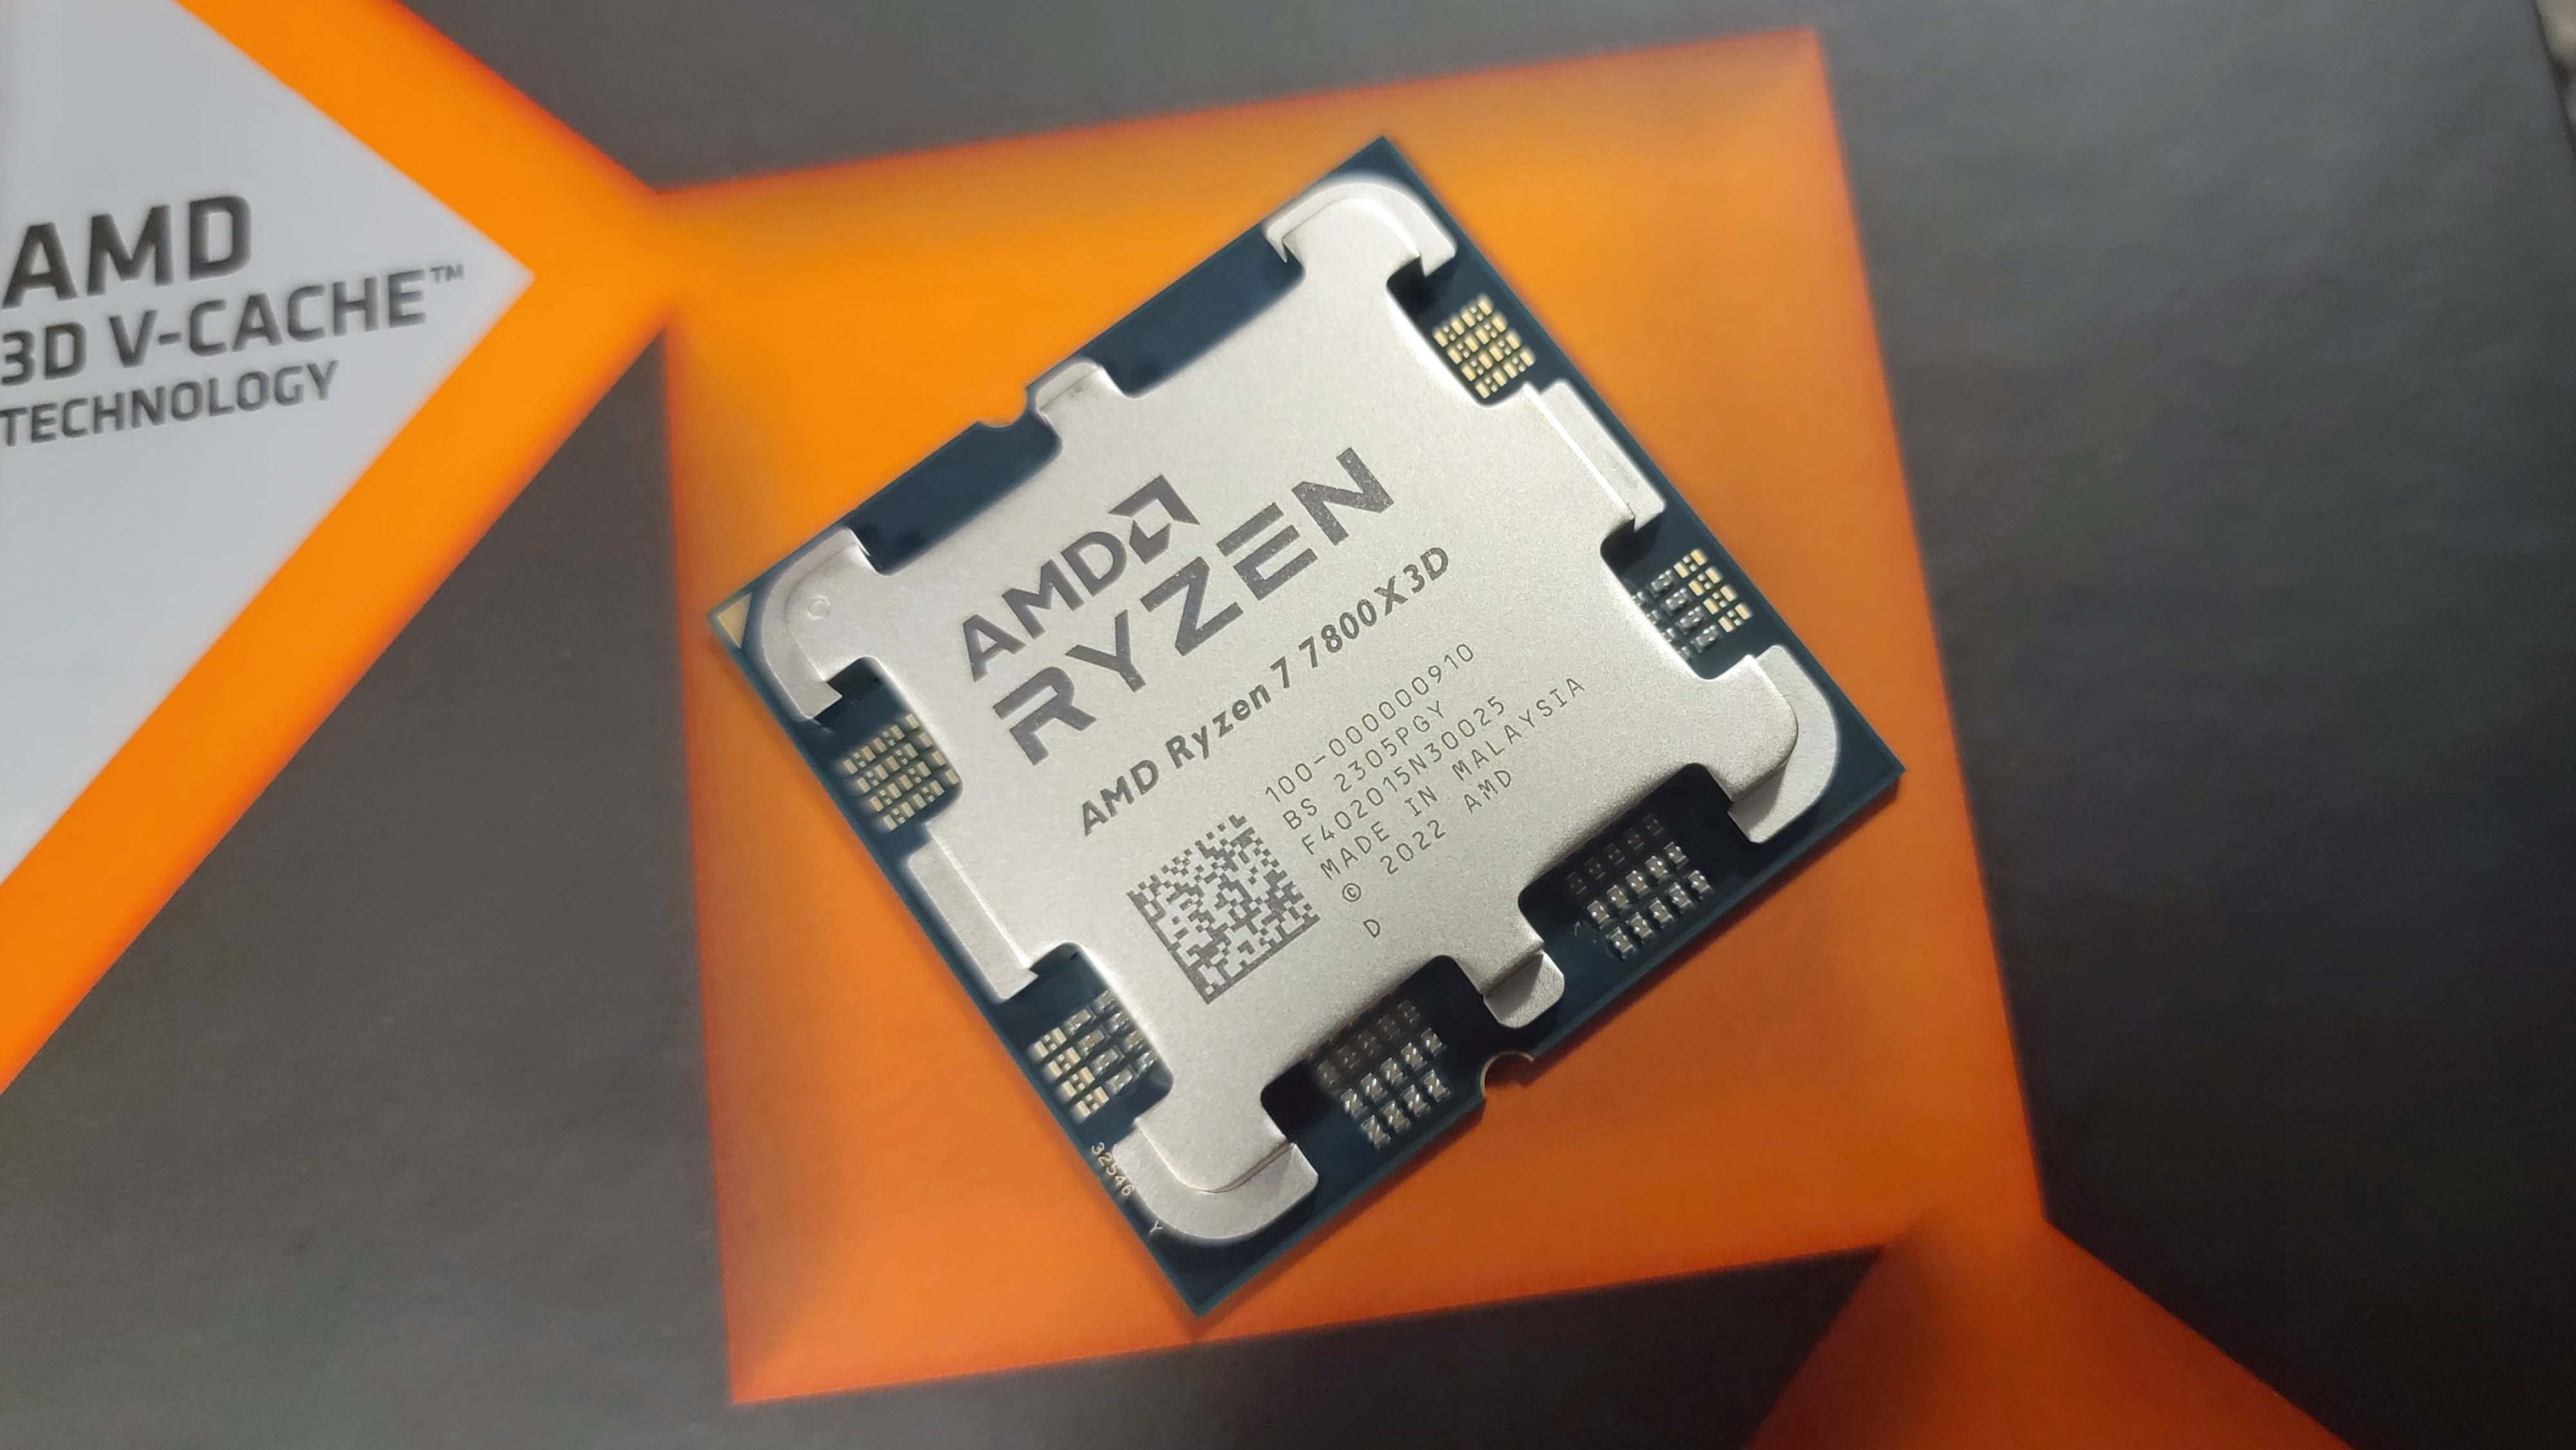 AMD Ryzen 7 7800X3D vs Ryzen 7 7700X - Shocking results